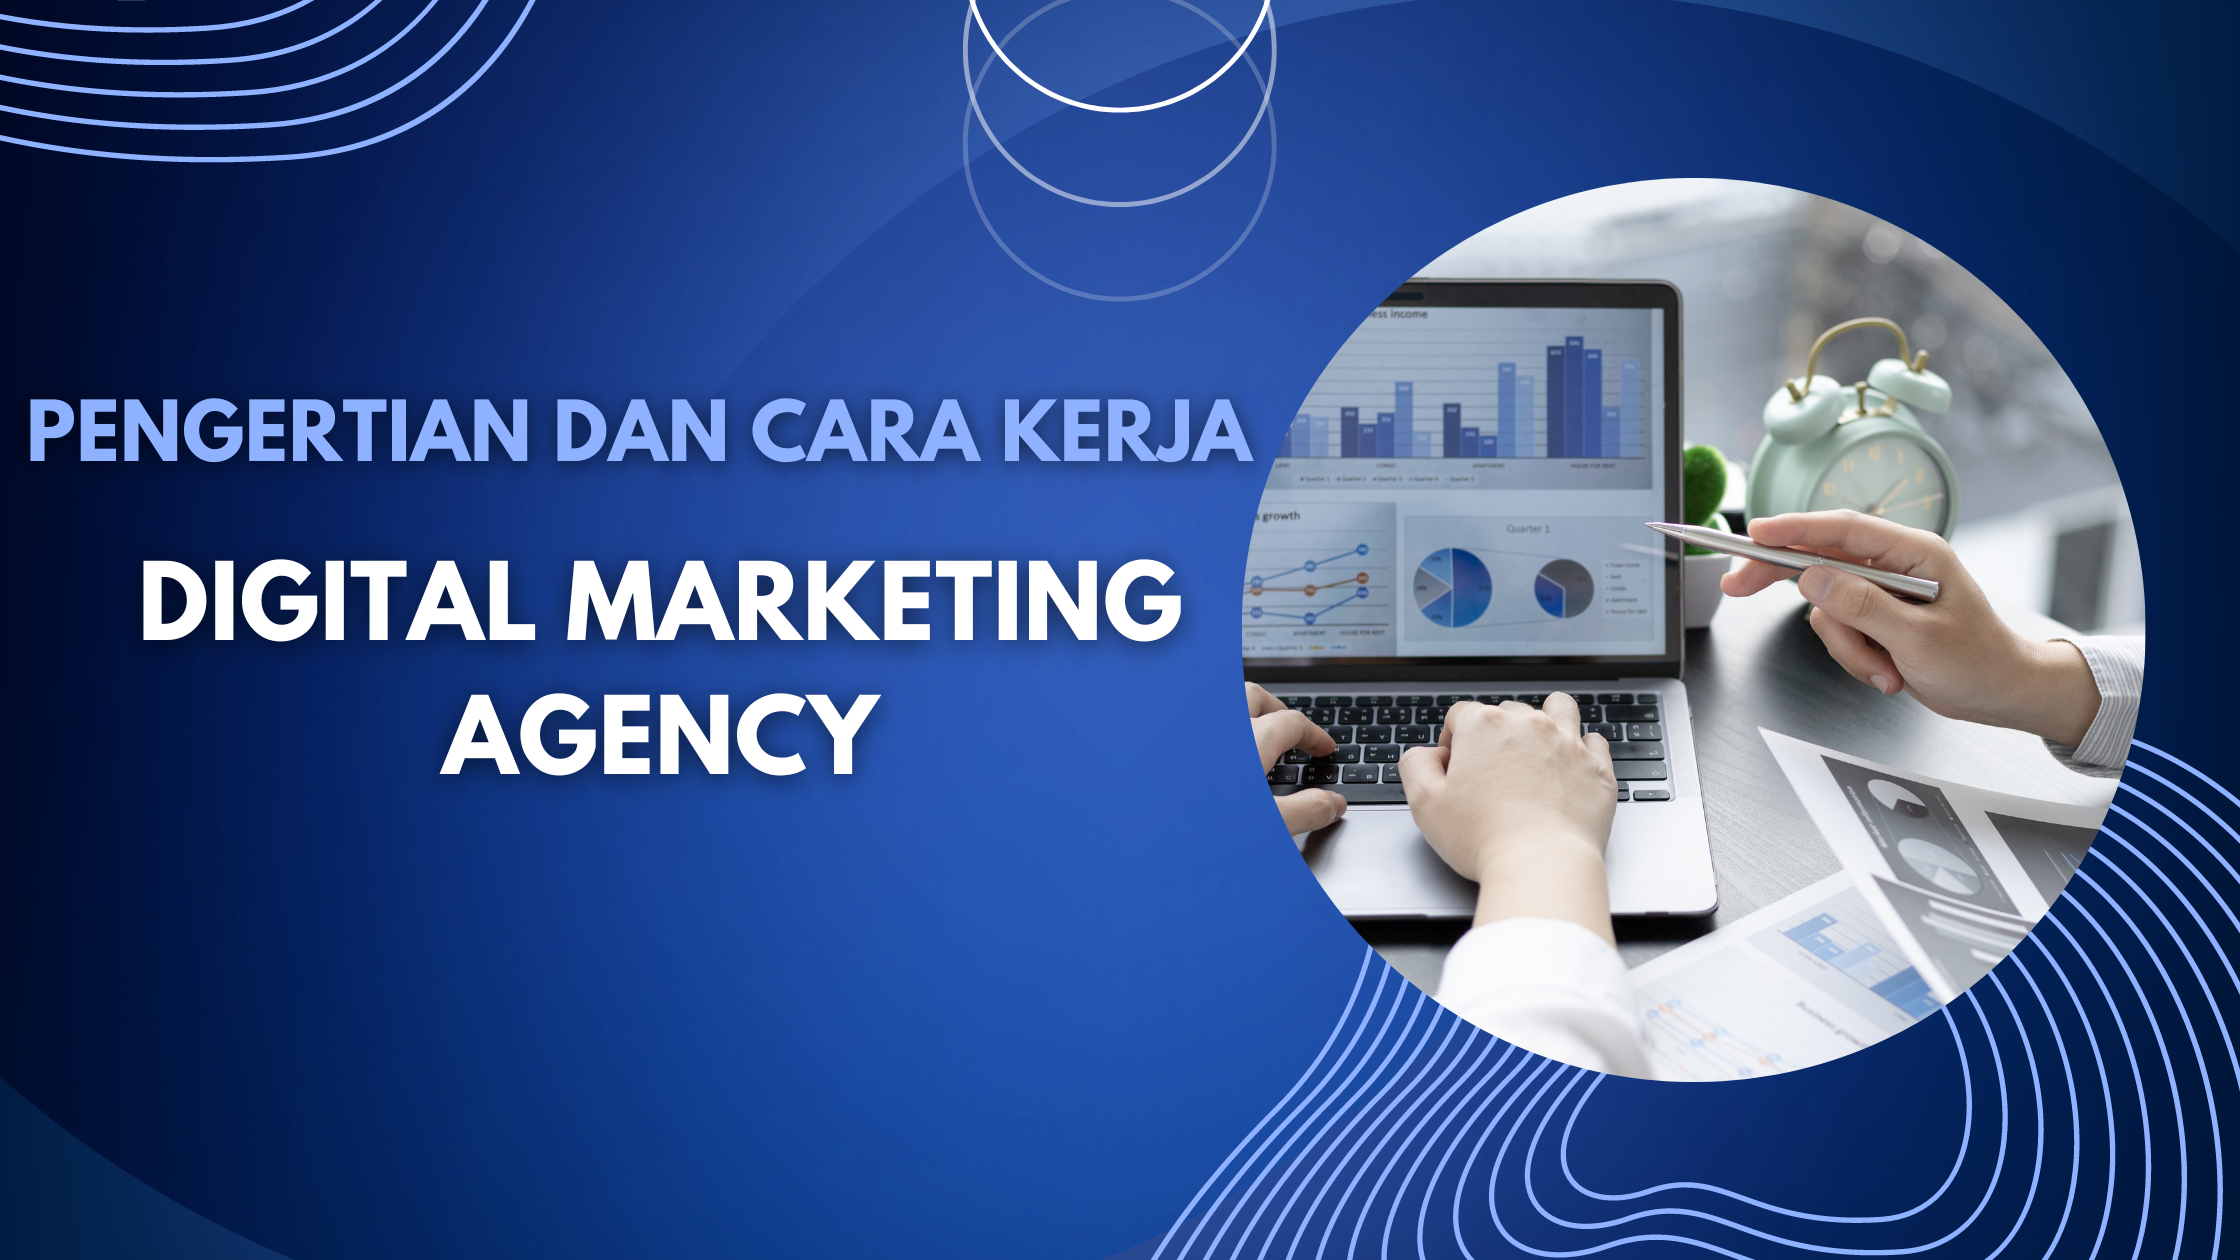 Digital Marketing Agency adalah Pengertian, Cara Kerja & Manfaatnya